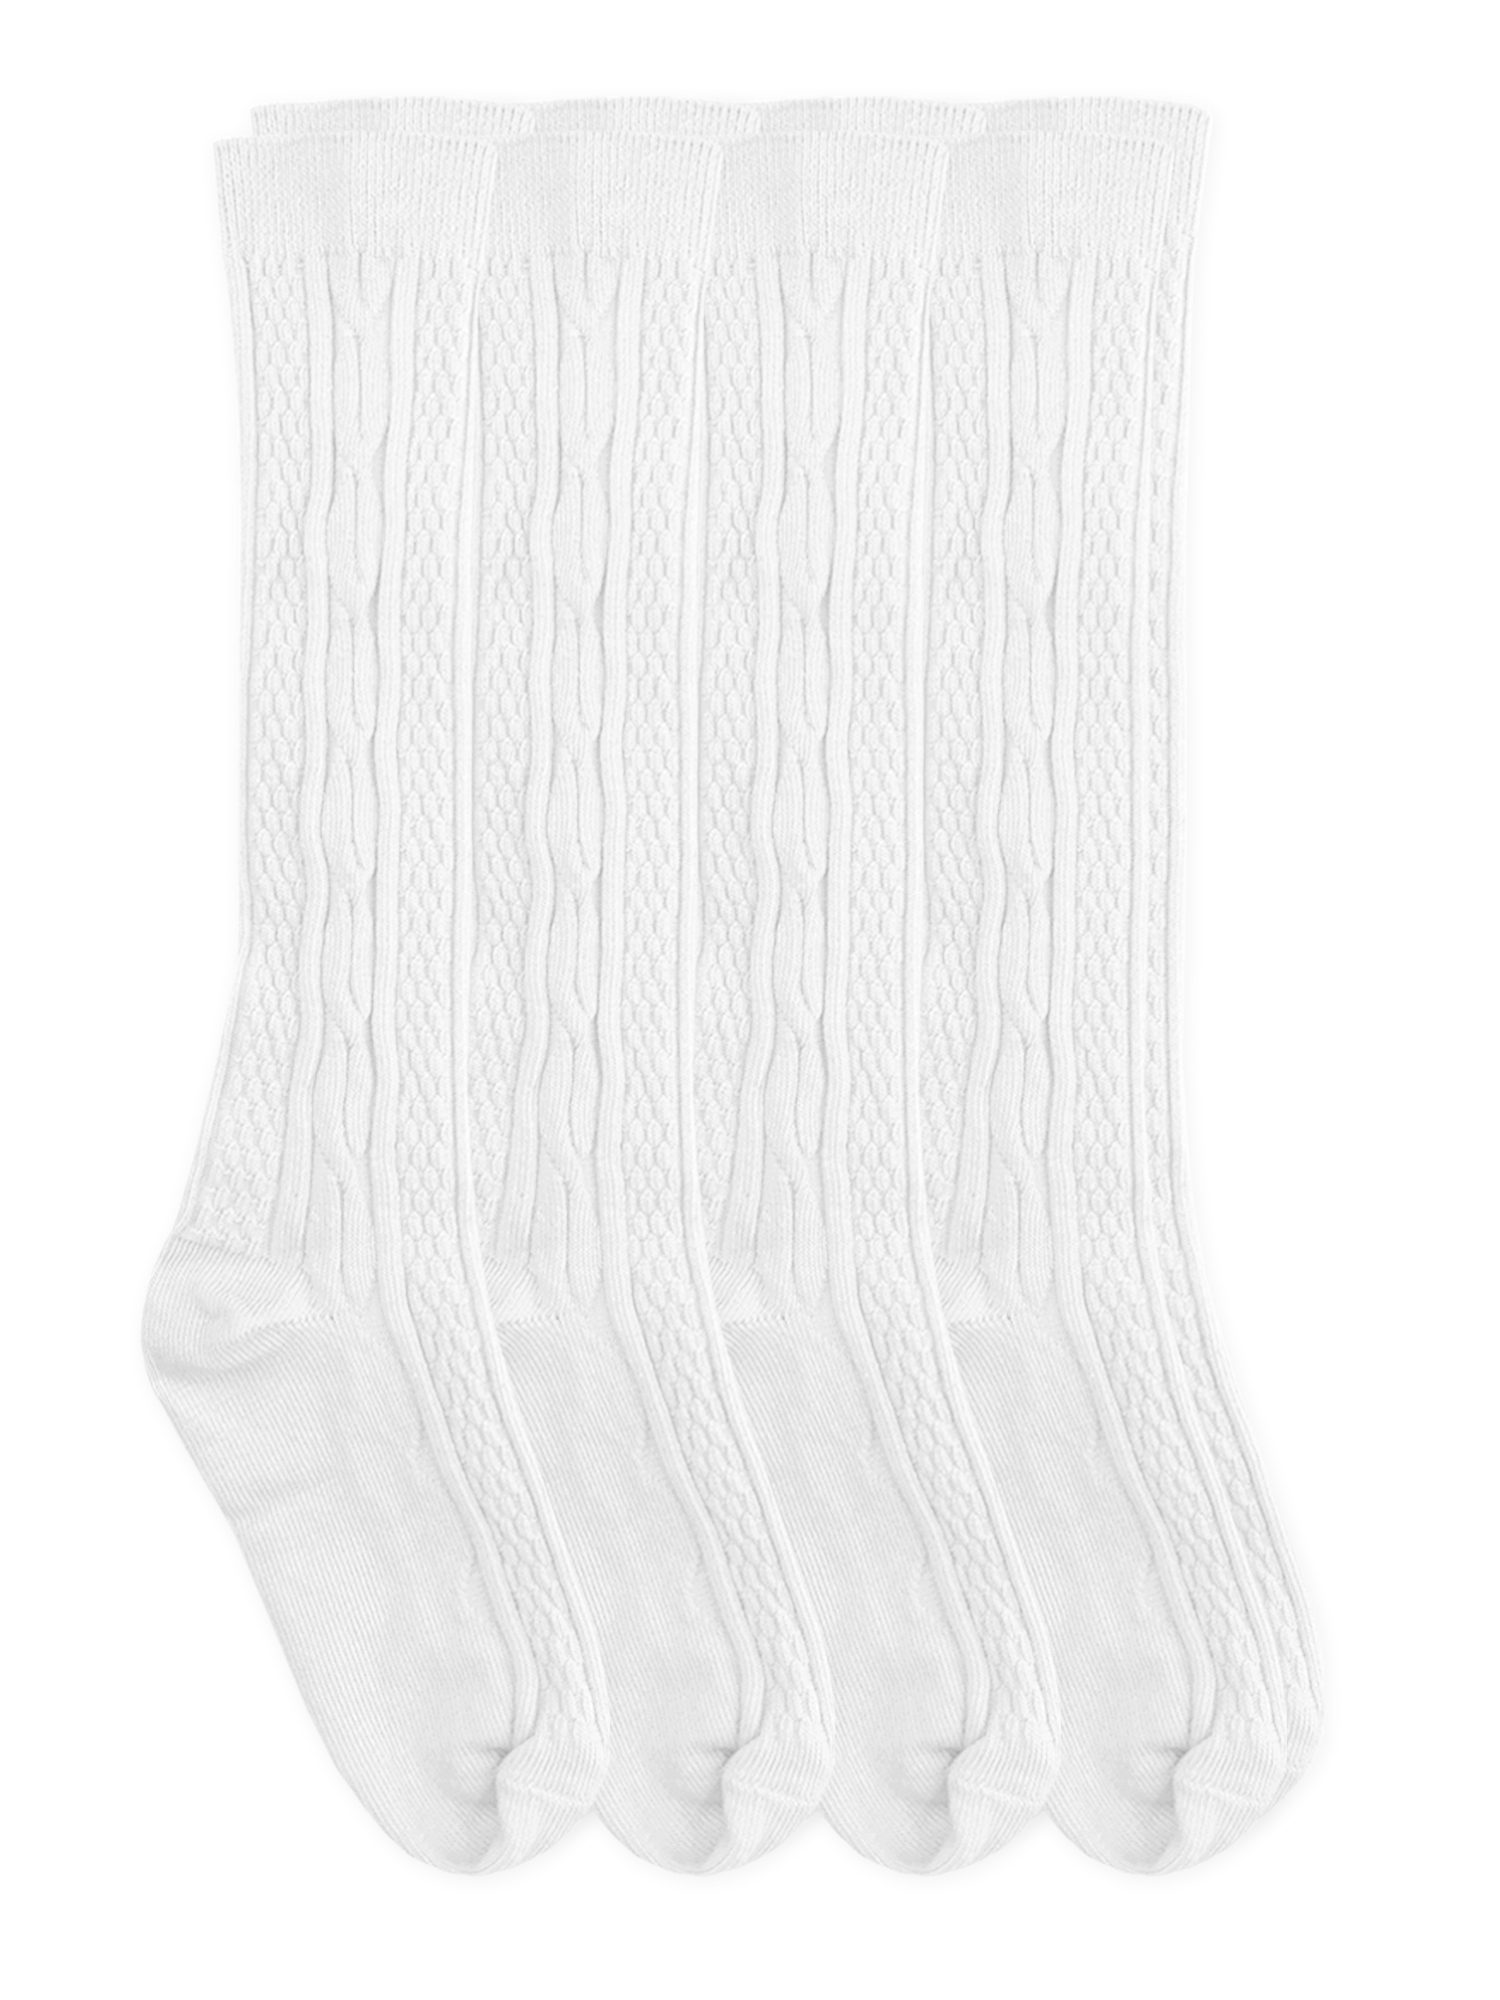 Jefferies Socks Kids Socks, 4 Pack Knee High School Uniform Cotton Cable Knit, Sizes XS-XL - image 1 of 2